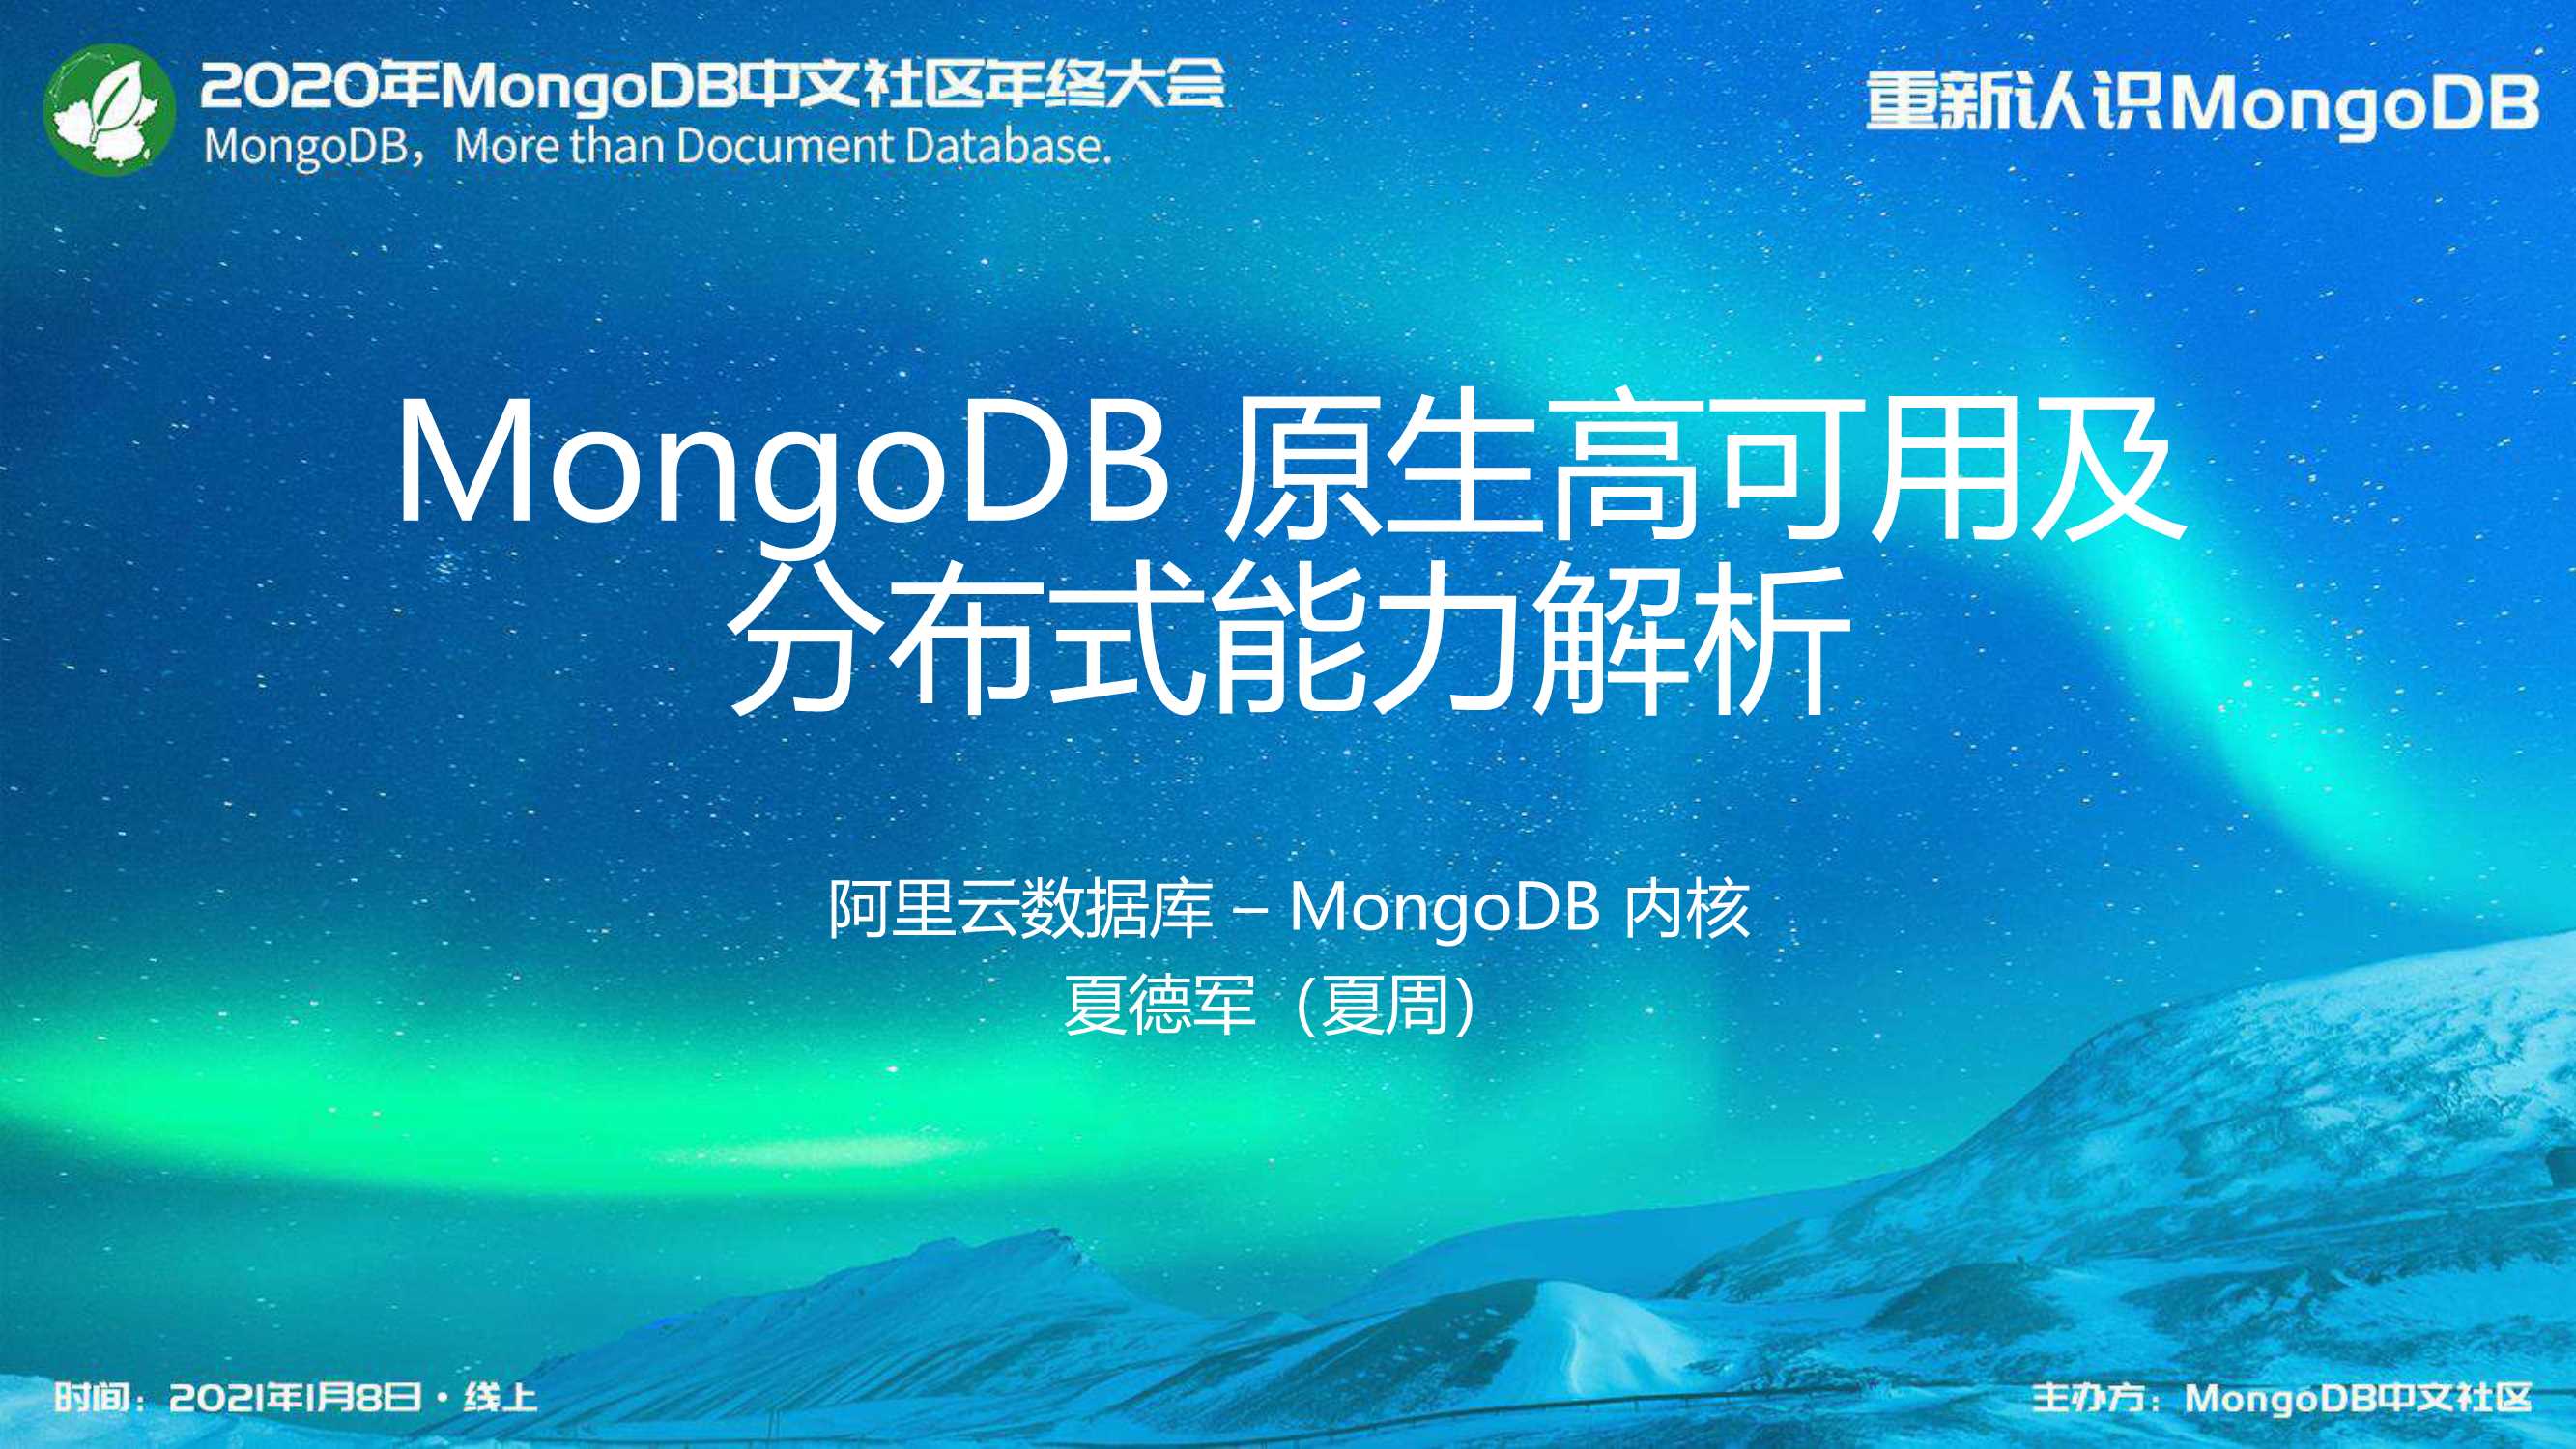 MongoDB 原生高可用及分布式能力解析-夏德军-31页